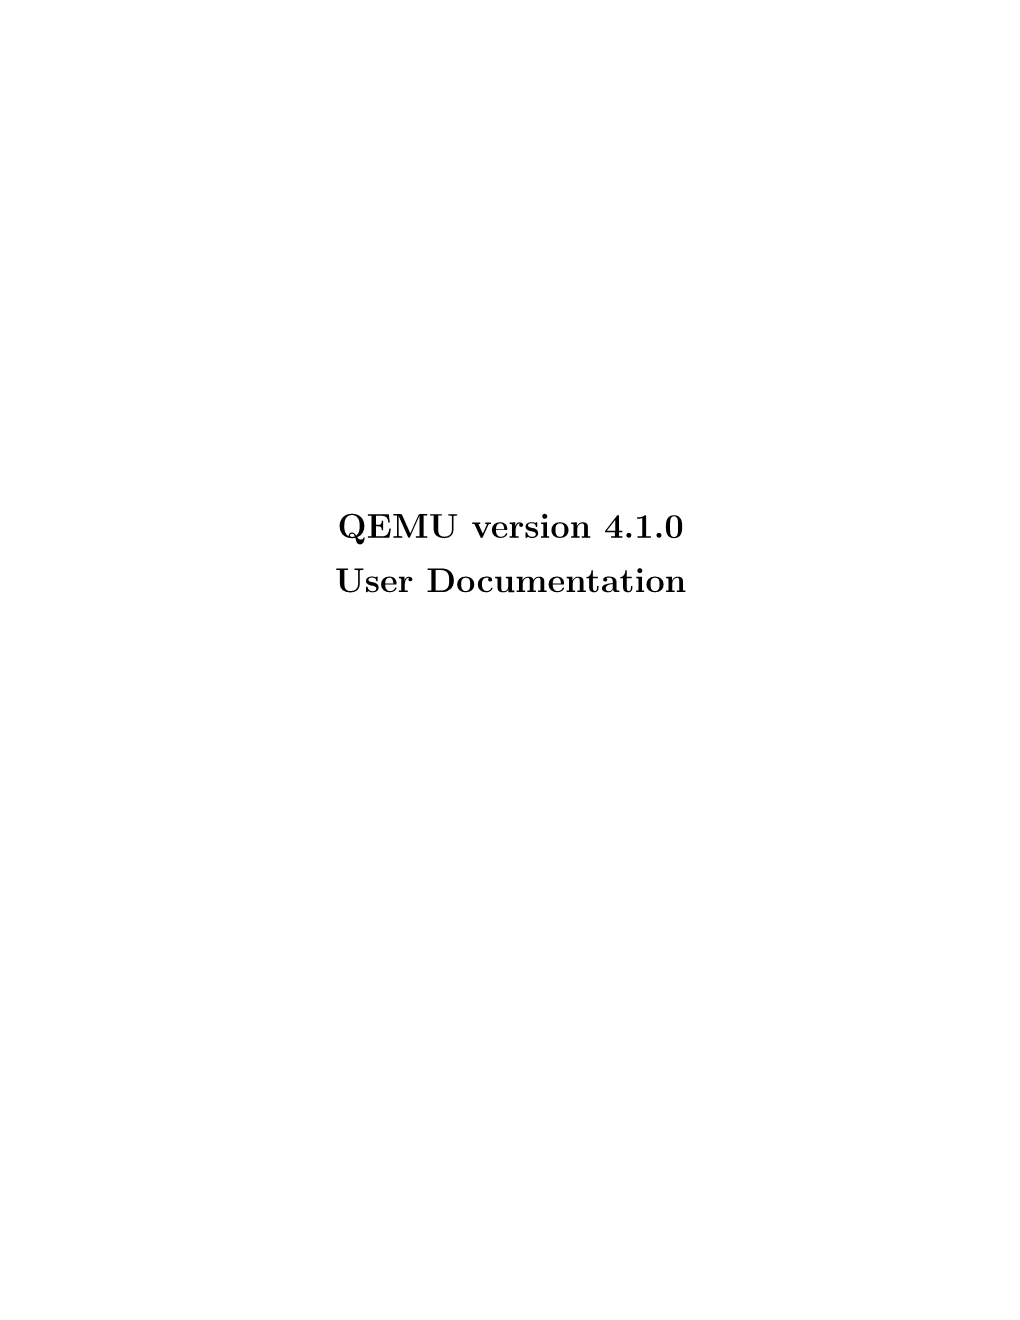 QEMU Version 4.1.0 User Documentation I